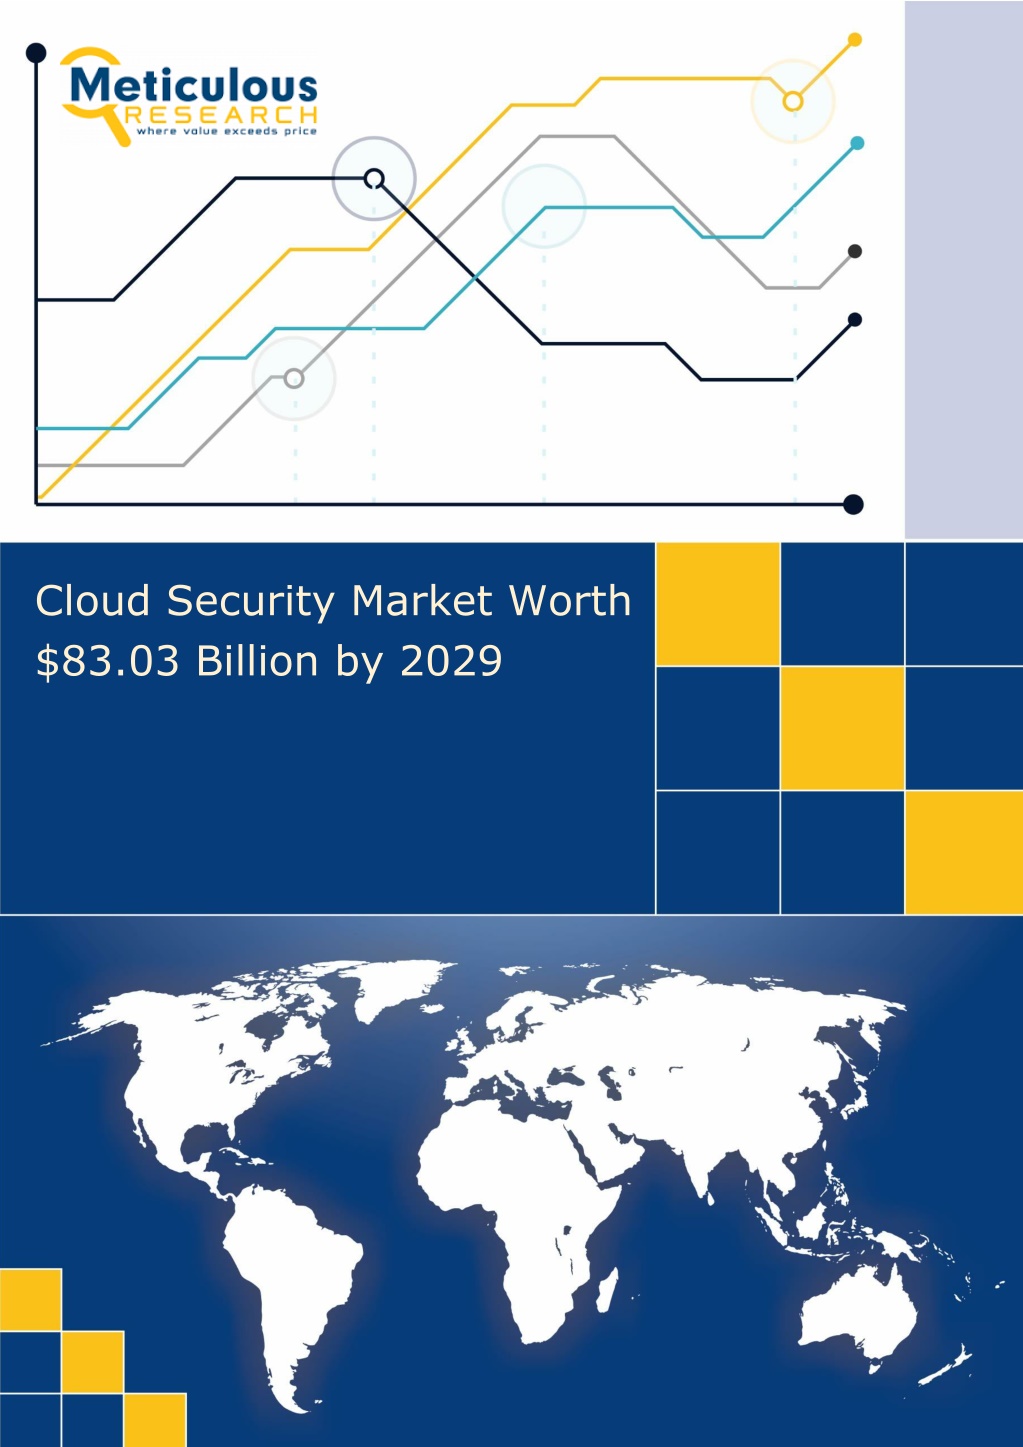 cloud security market worth 83 03 billion by 2029 l.w